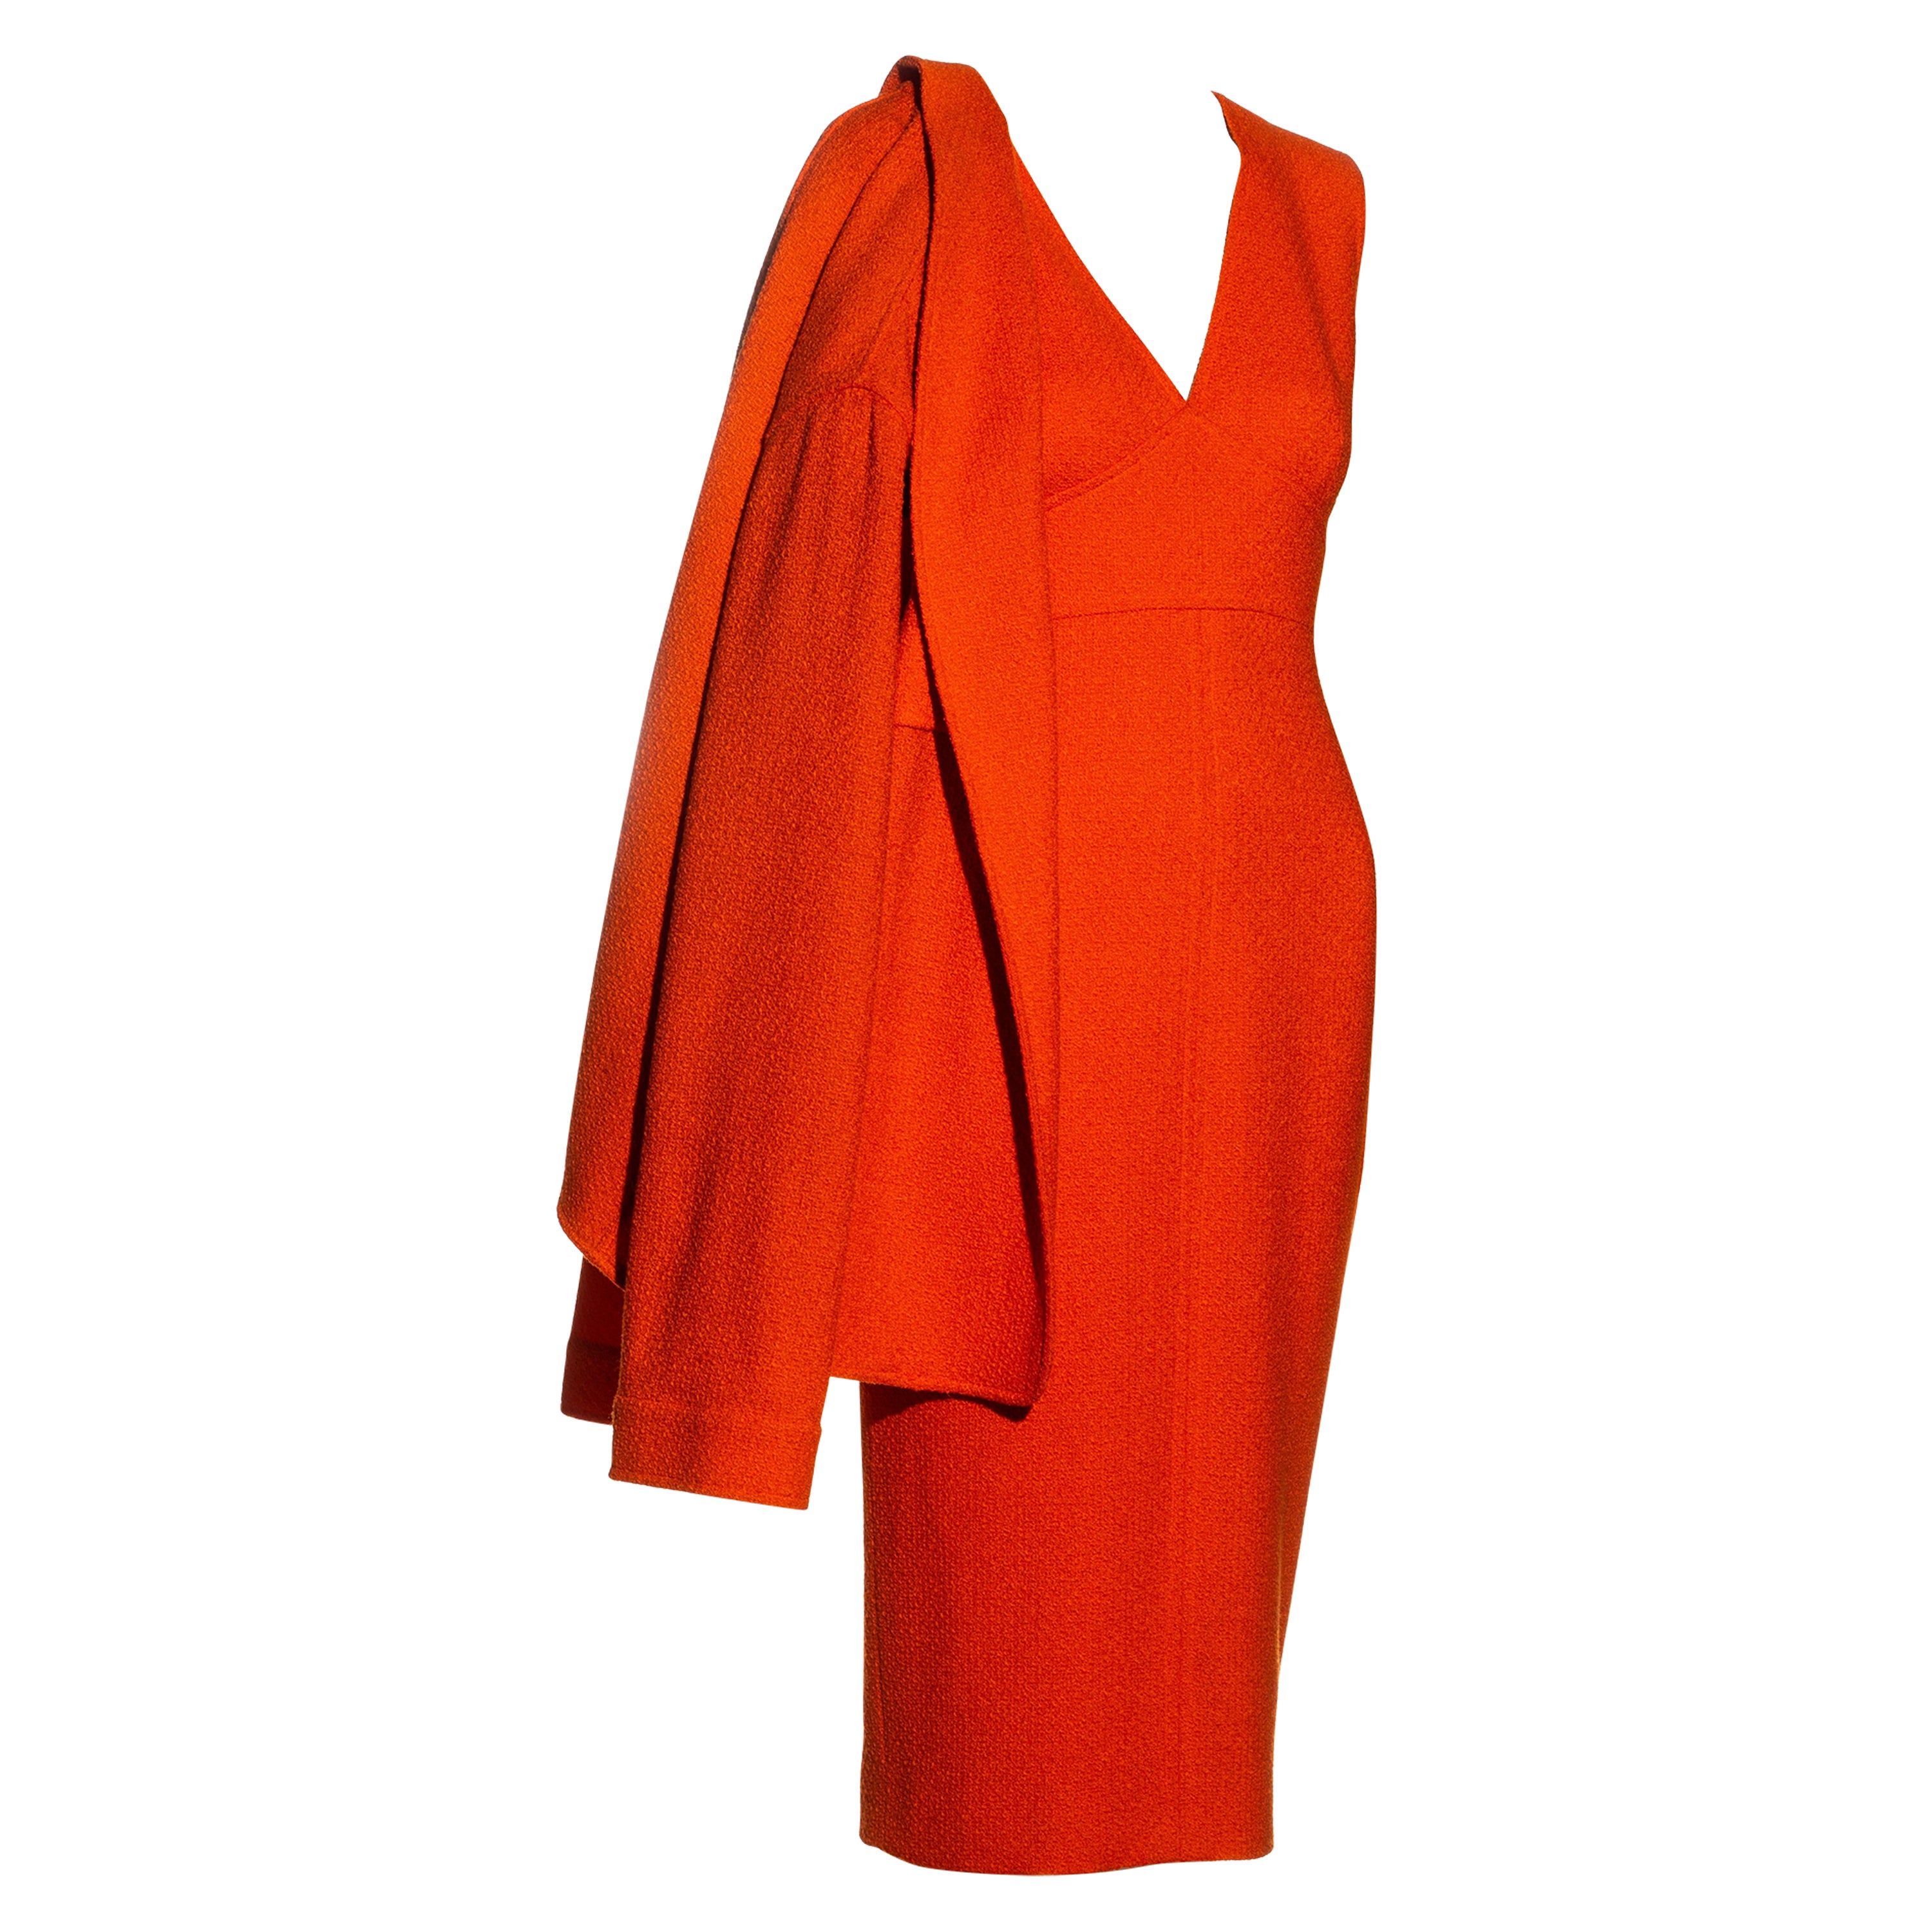 Chanel by Karl Lagerfeld orange bouclé wool dress and jacket set, fw 1995